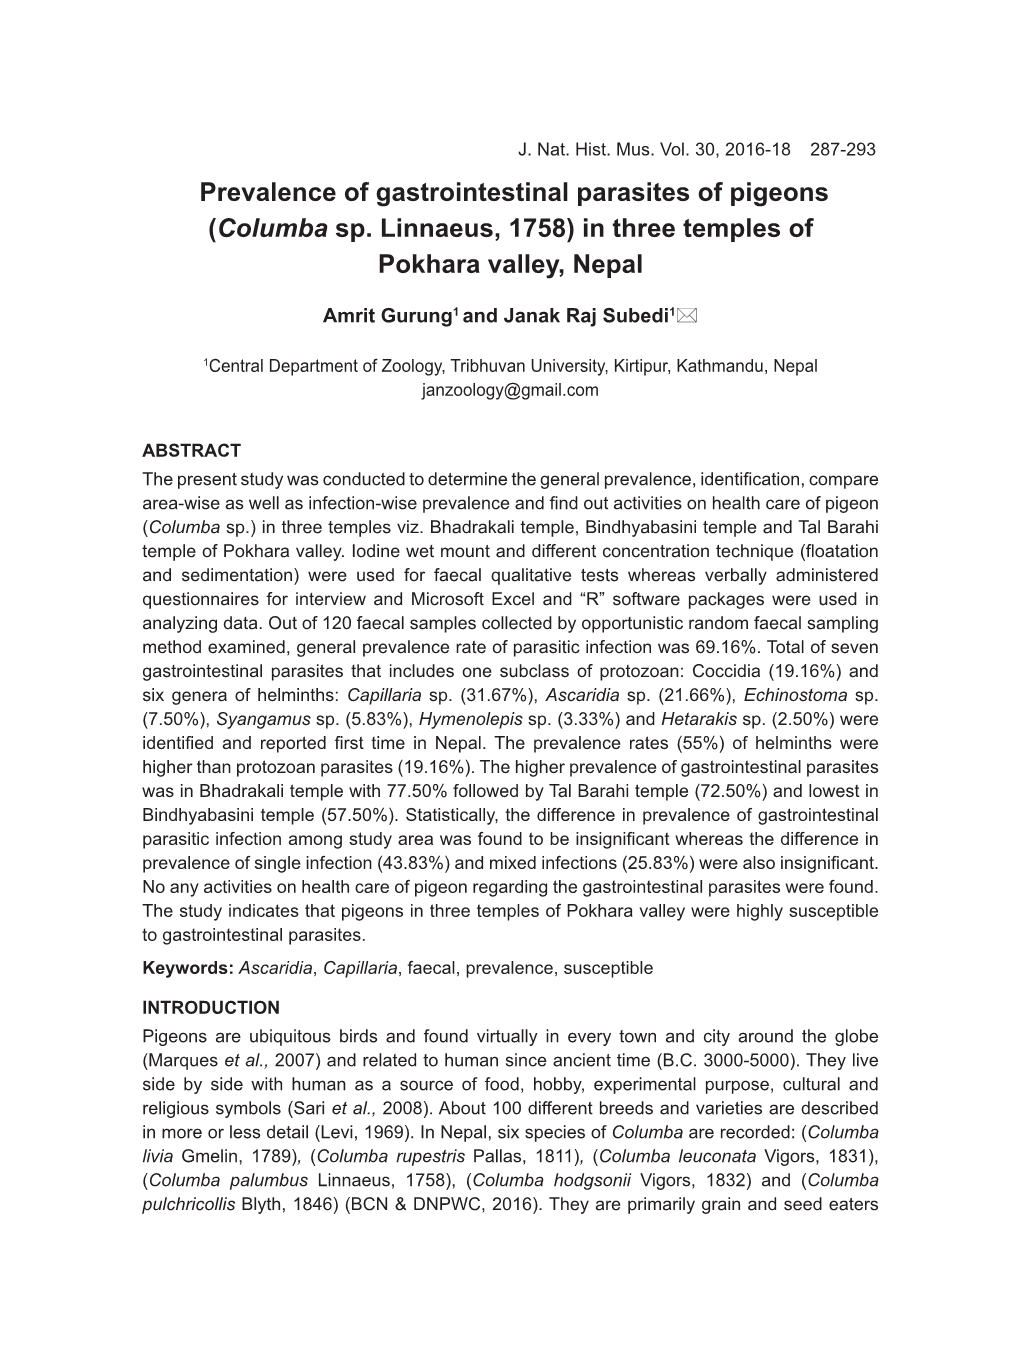 Prevalence of Gastrointestinal Parasites of Pigeons (Columba Sp